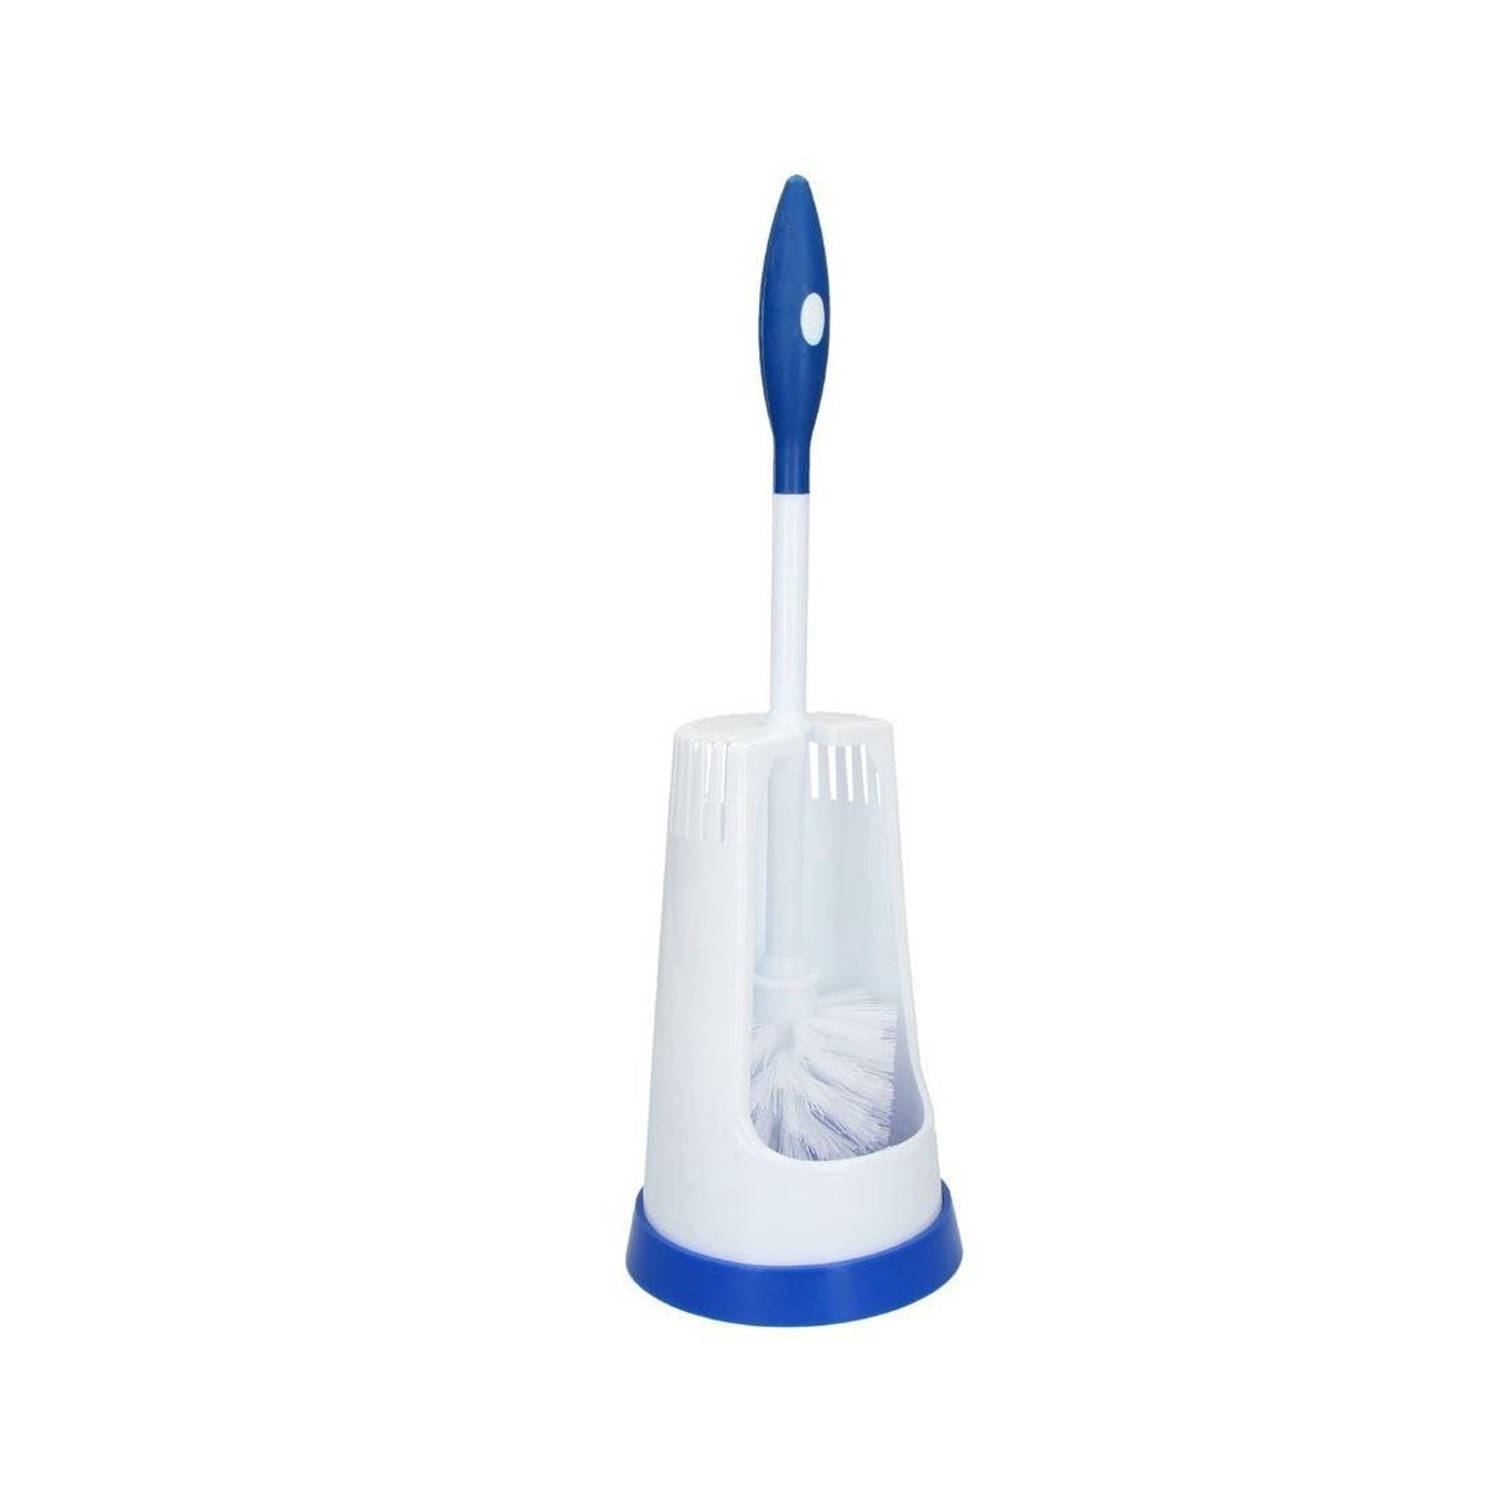 Plastic Witte Toiletborstelhouder met Blauwe Onderkant - 40x15cm - Wit - 1 Stuk Borstel Houder met WC Borstel Toilet